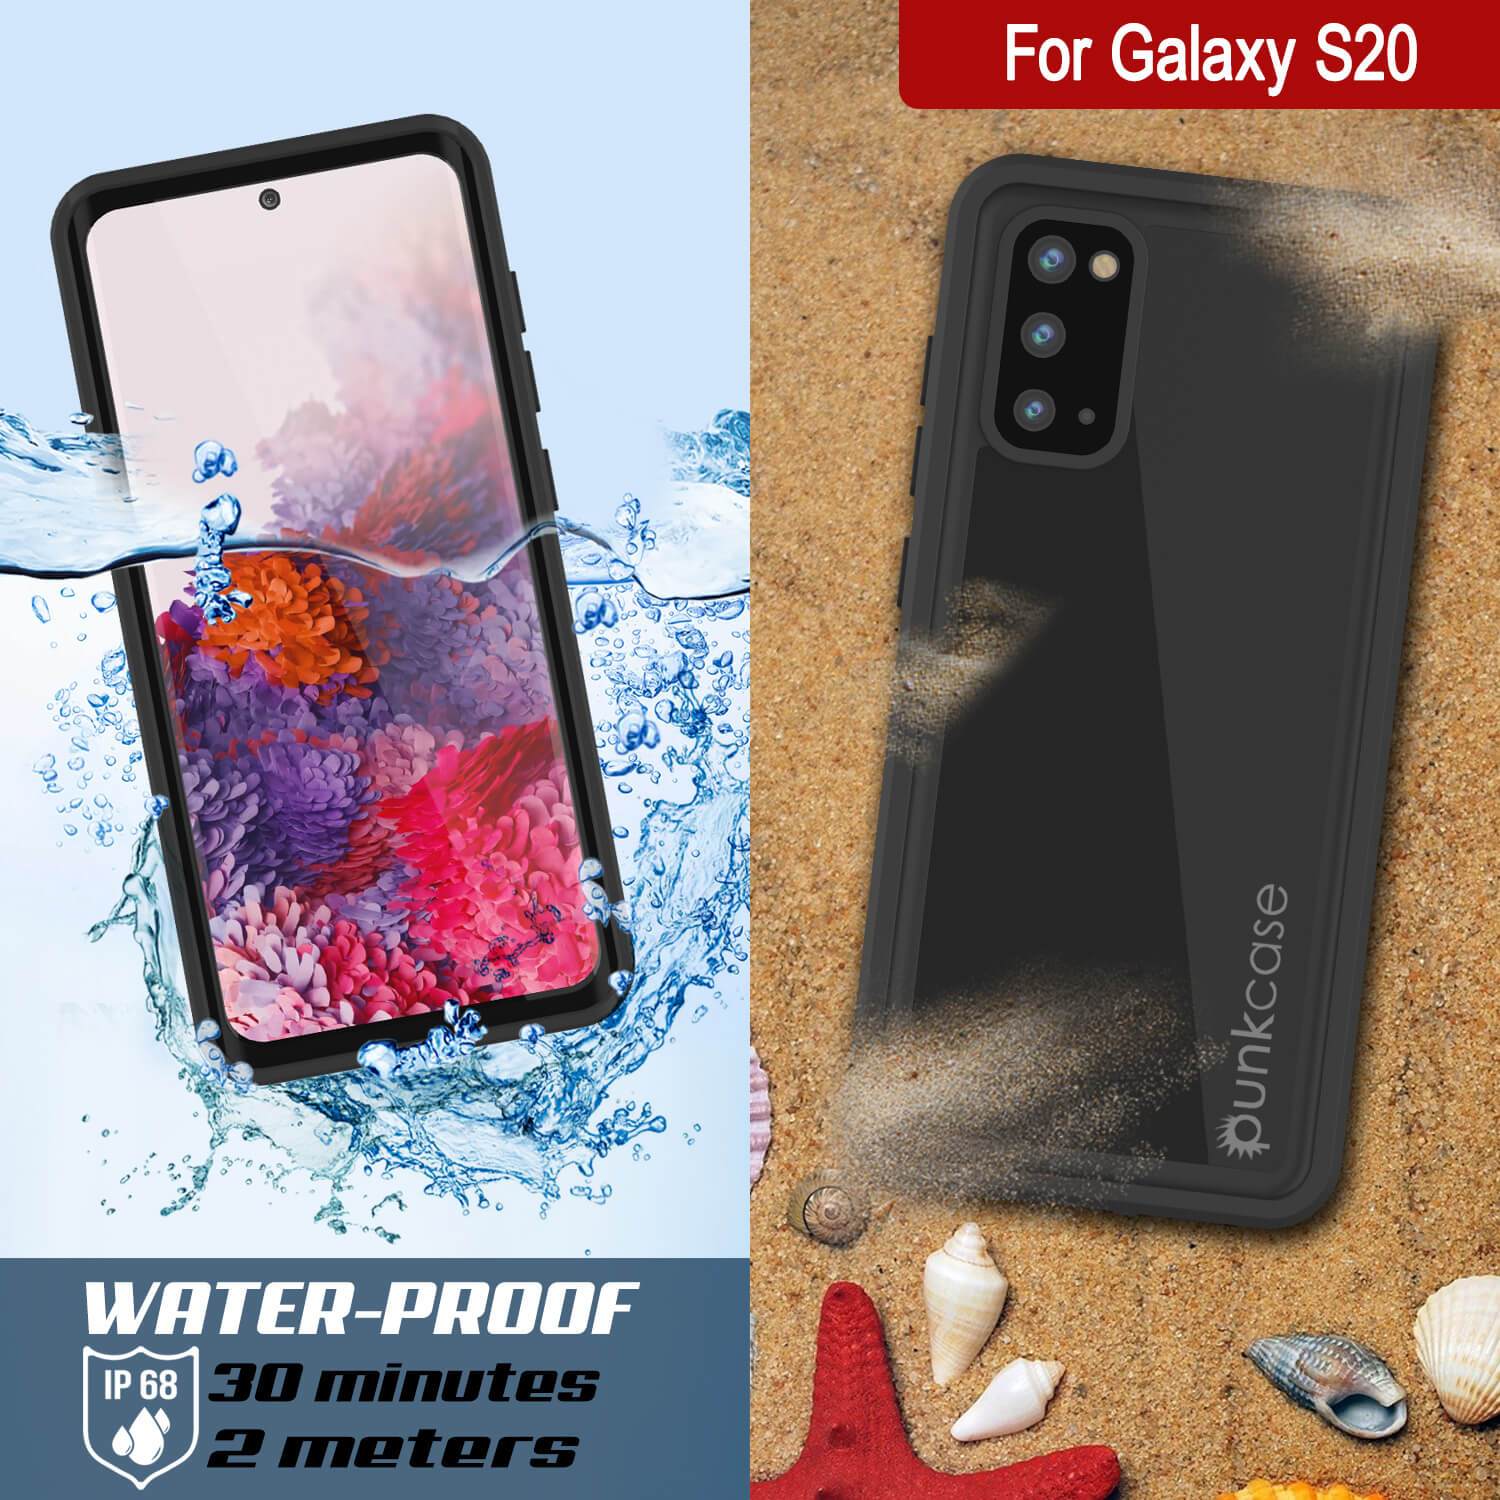 Galaxy S20 Waterproof Case PunkCase StudStar Purple Thin 6.6ft Underwater IP68 Shock/Snow Proof